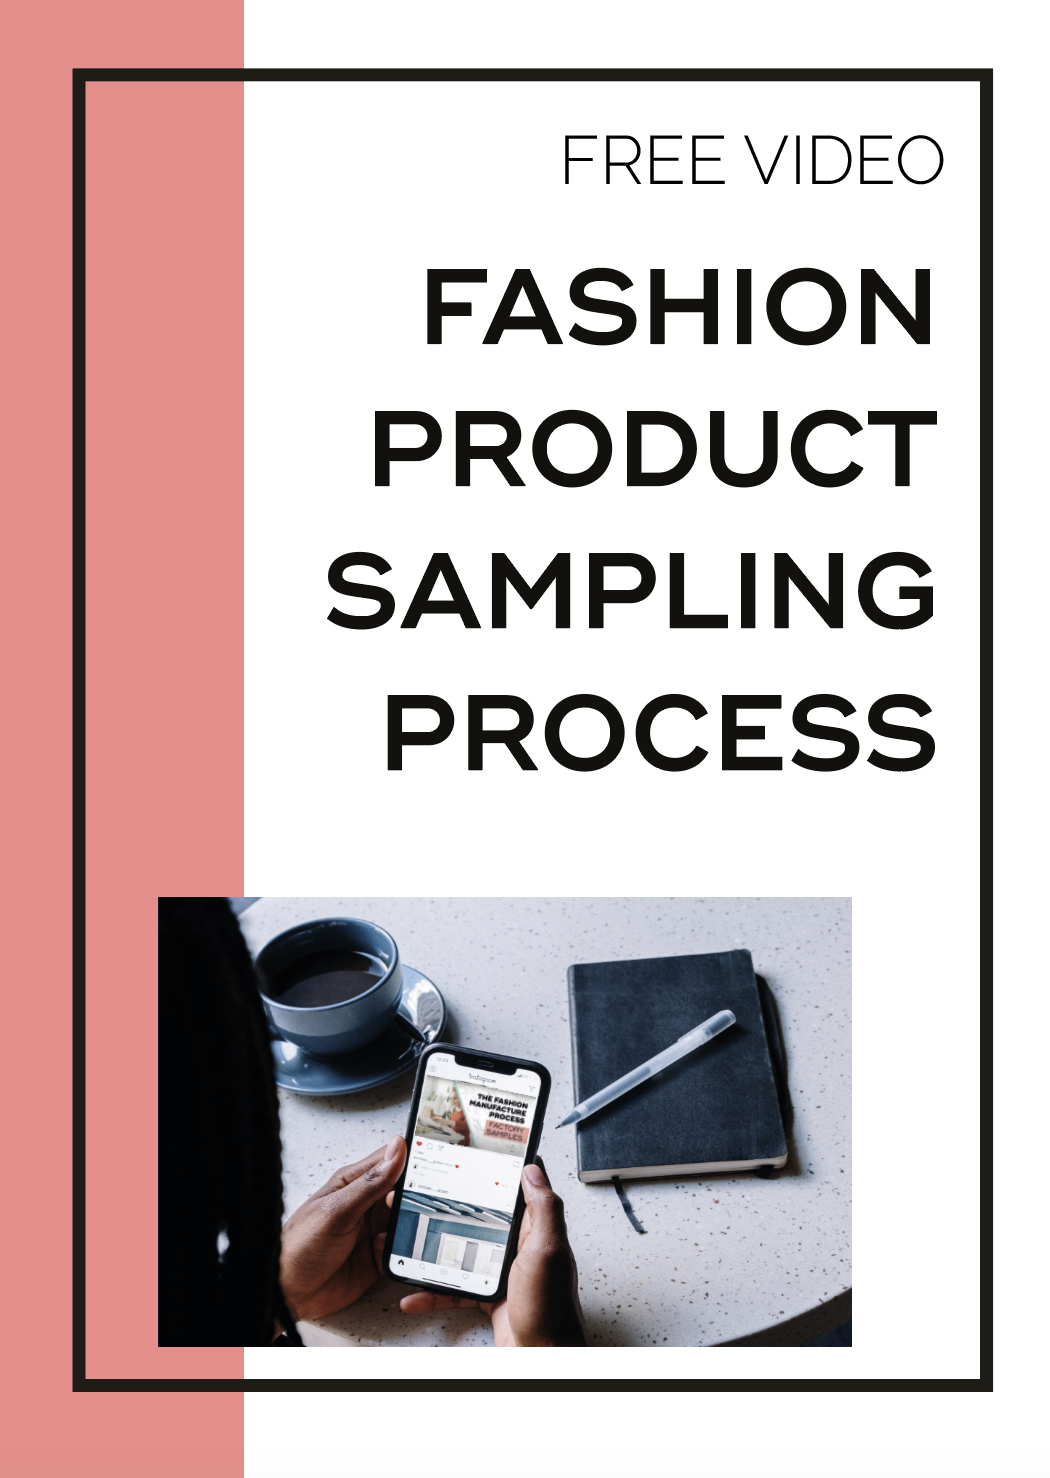 Fashion Product Sampling Process 4.png